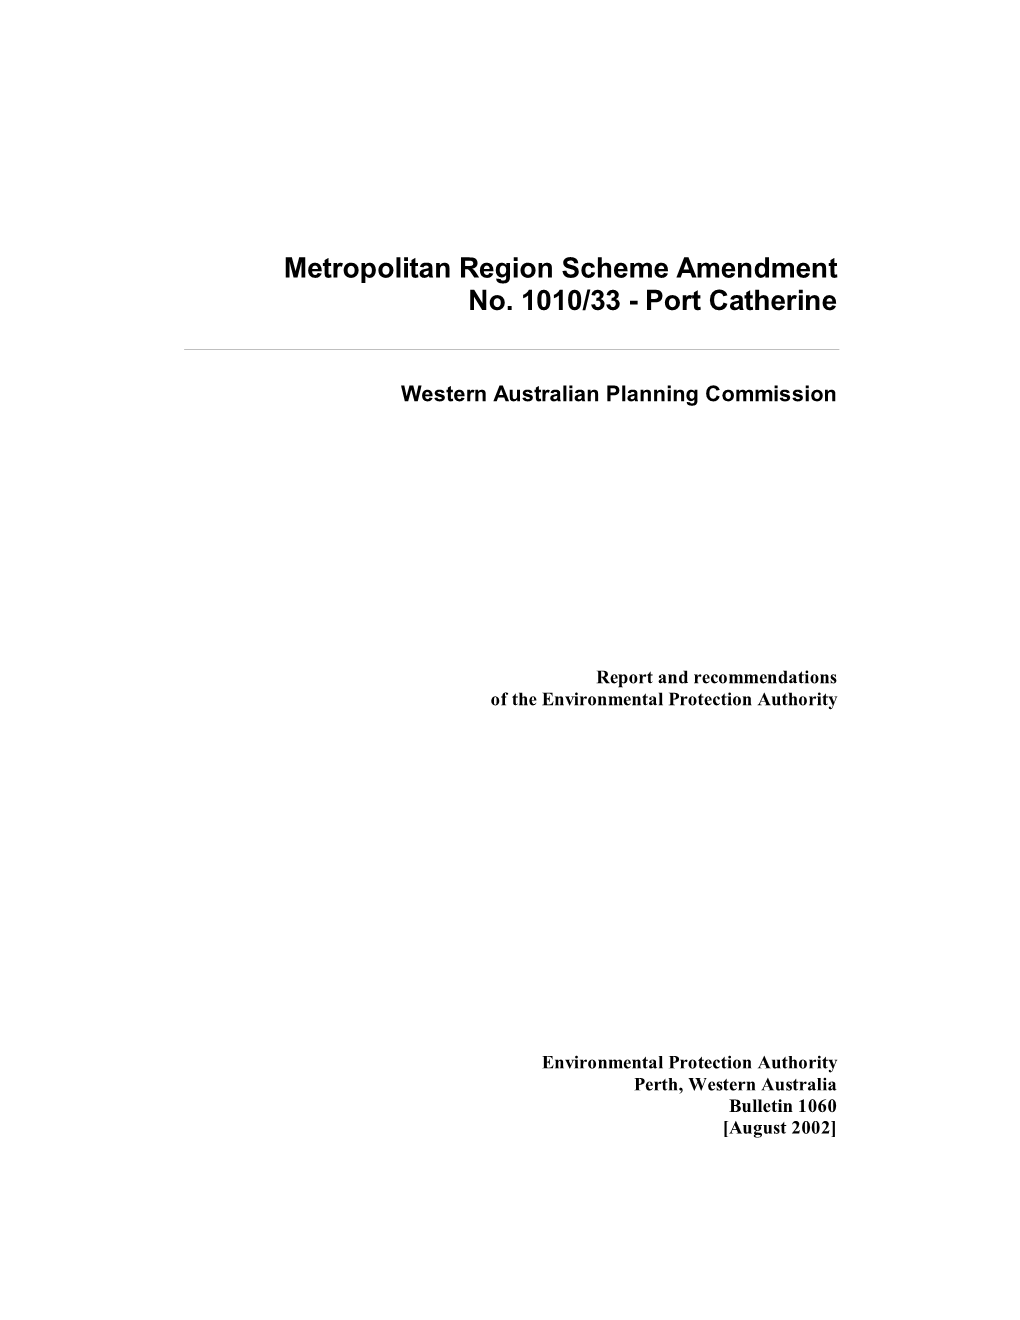 Metropolitan Region Scheme Amendment No. 1010/33 - Port Catherine